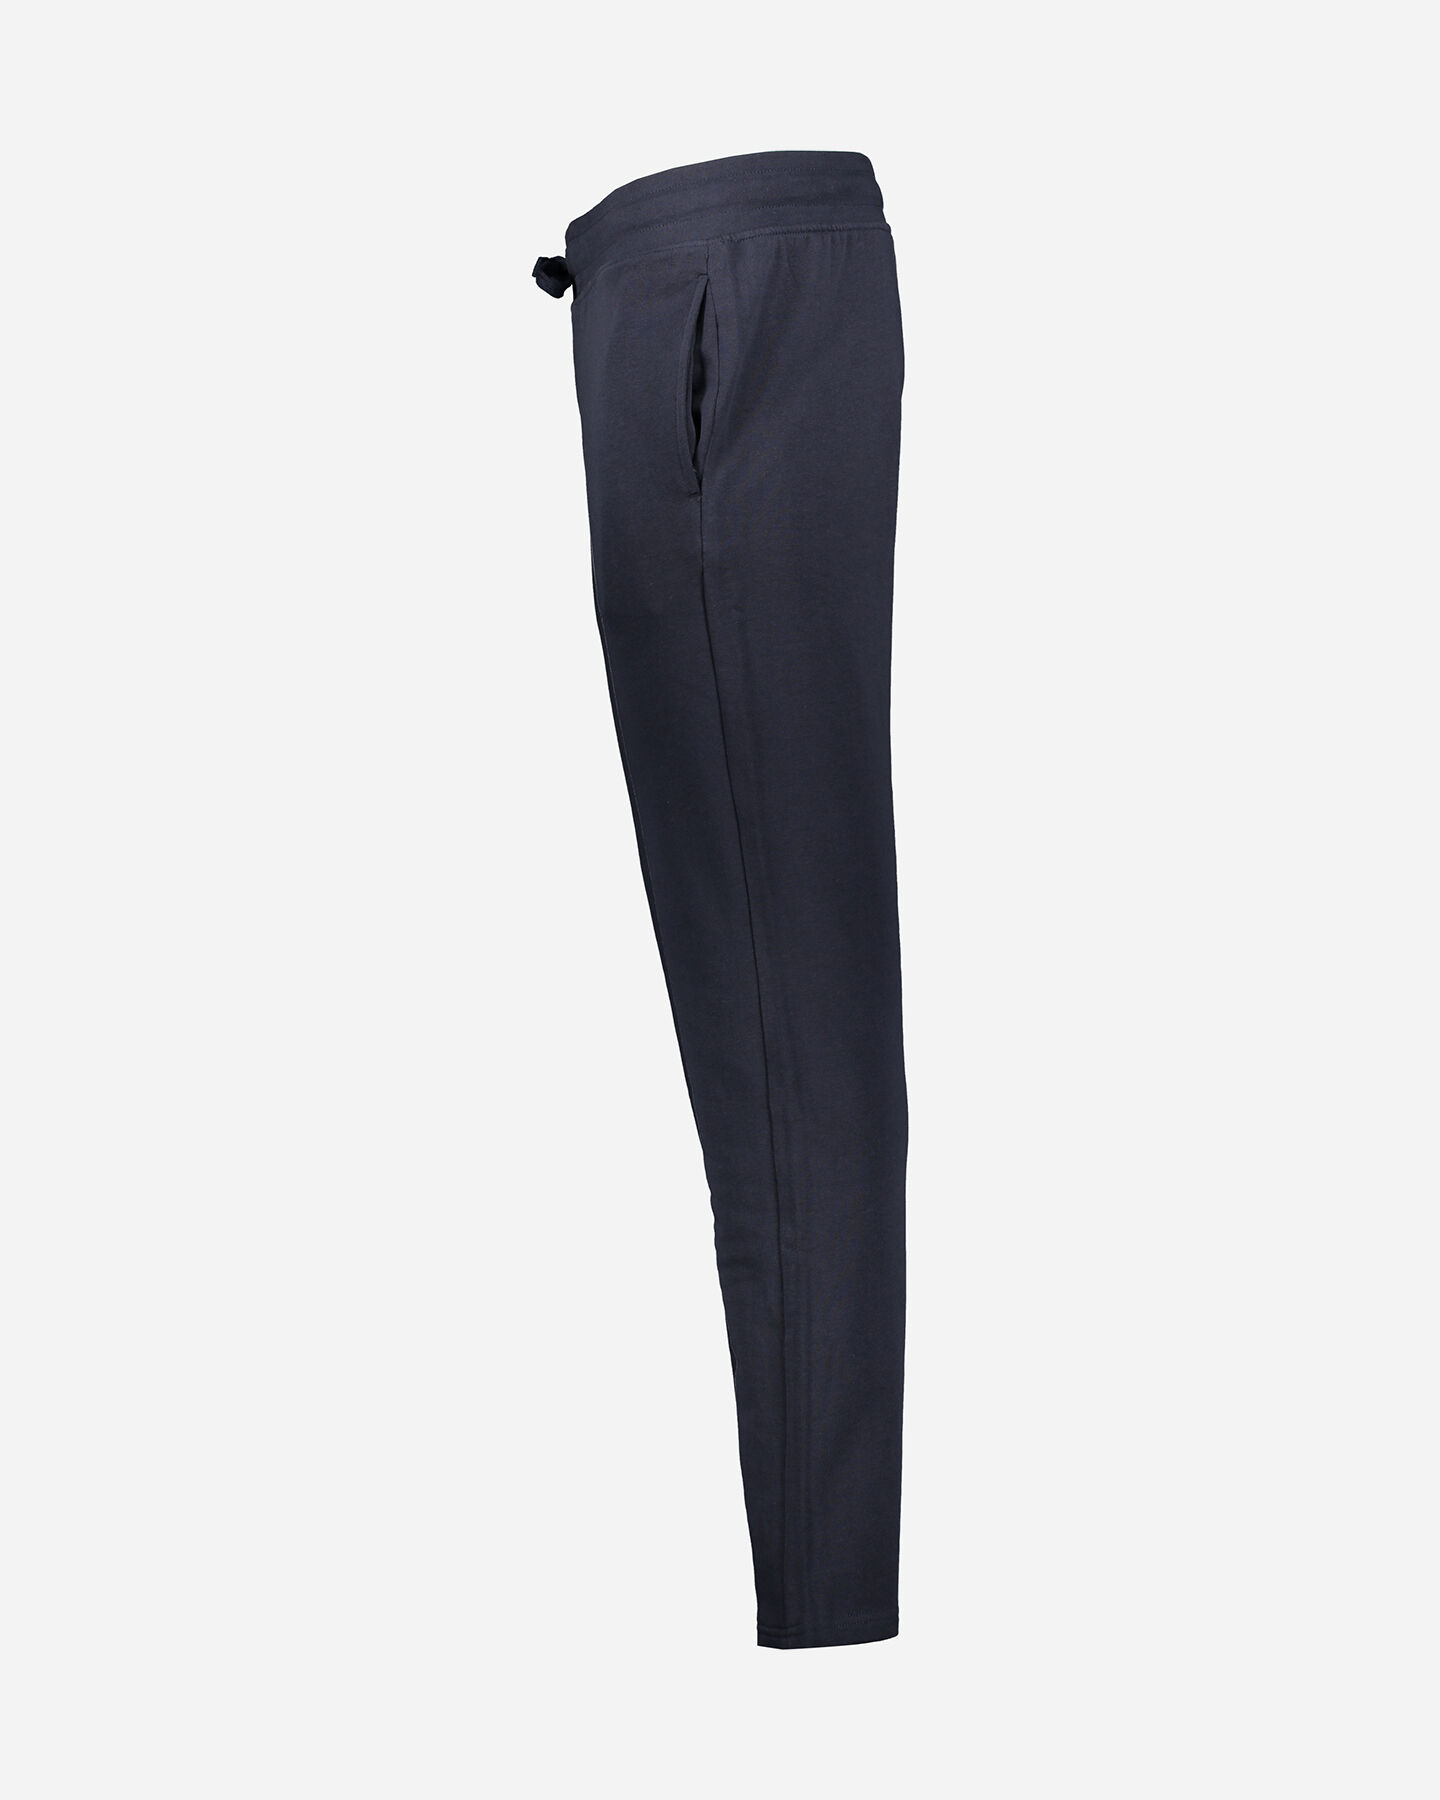  Pantalone ADMIRAL BASIC LOGO M S4074036|914|S scatto 1